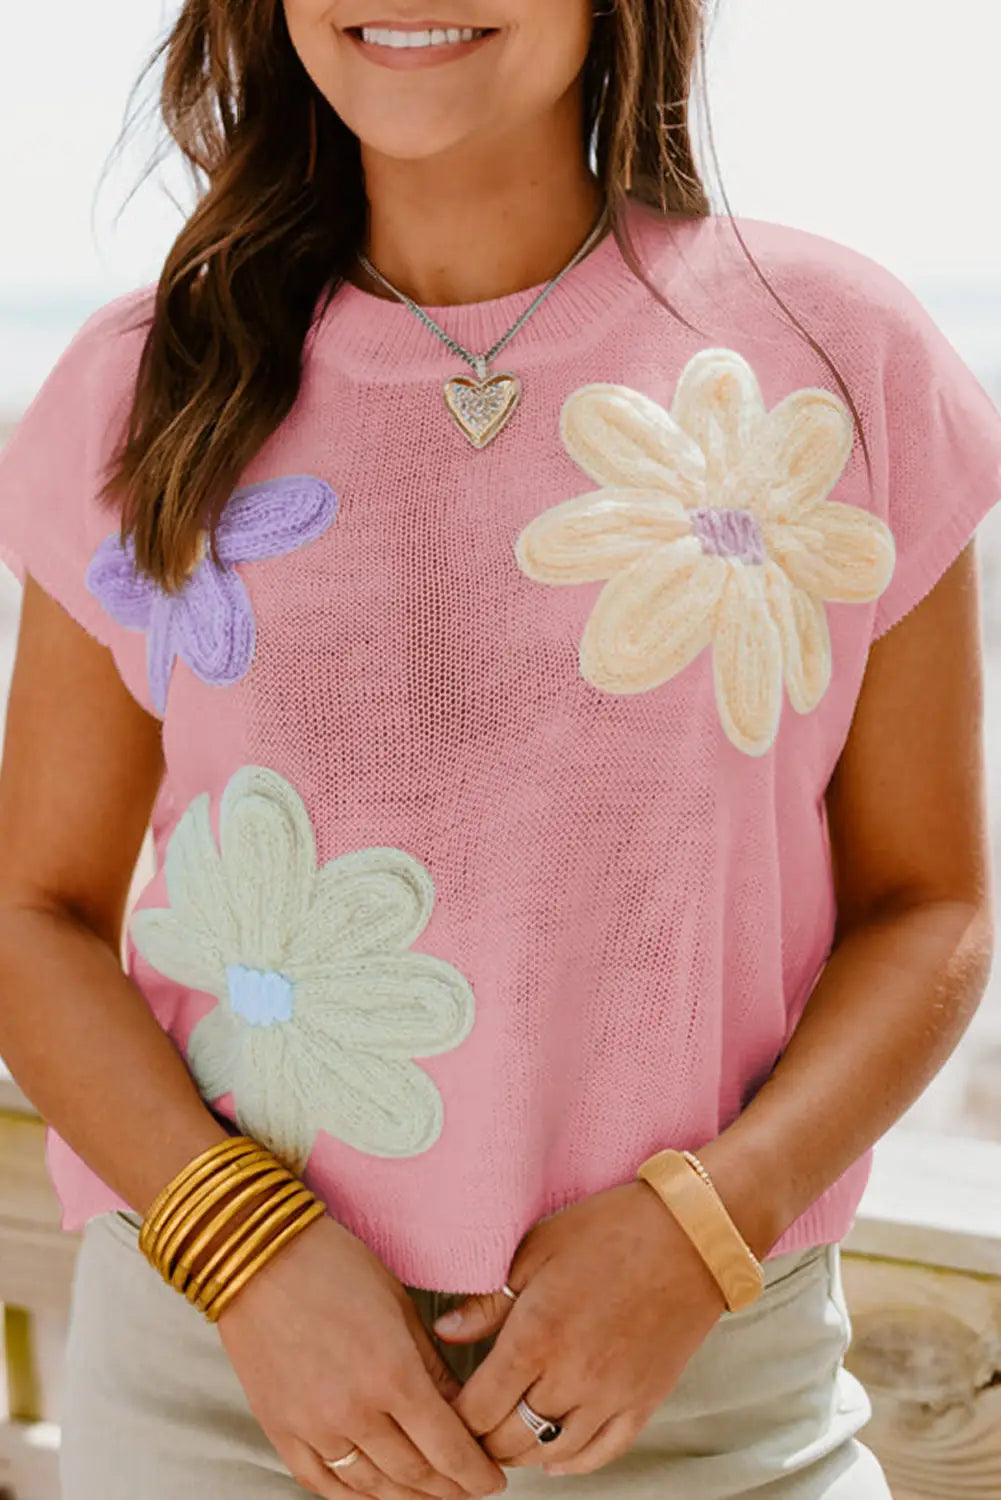 Flower knit top - short sleeve pink multi crochet sweater - s / 100% cotton - sweaters